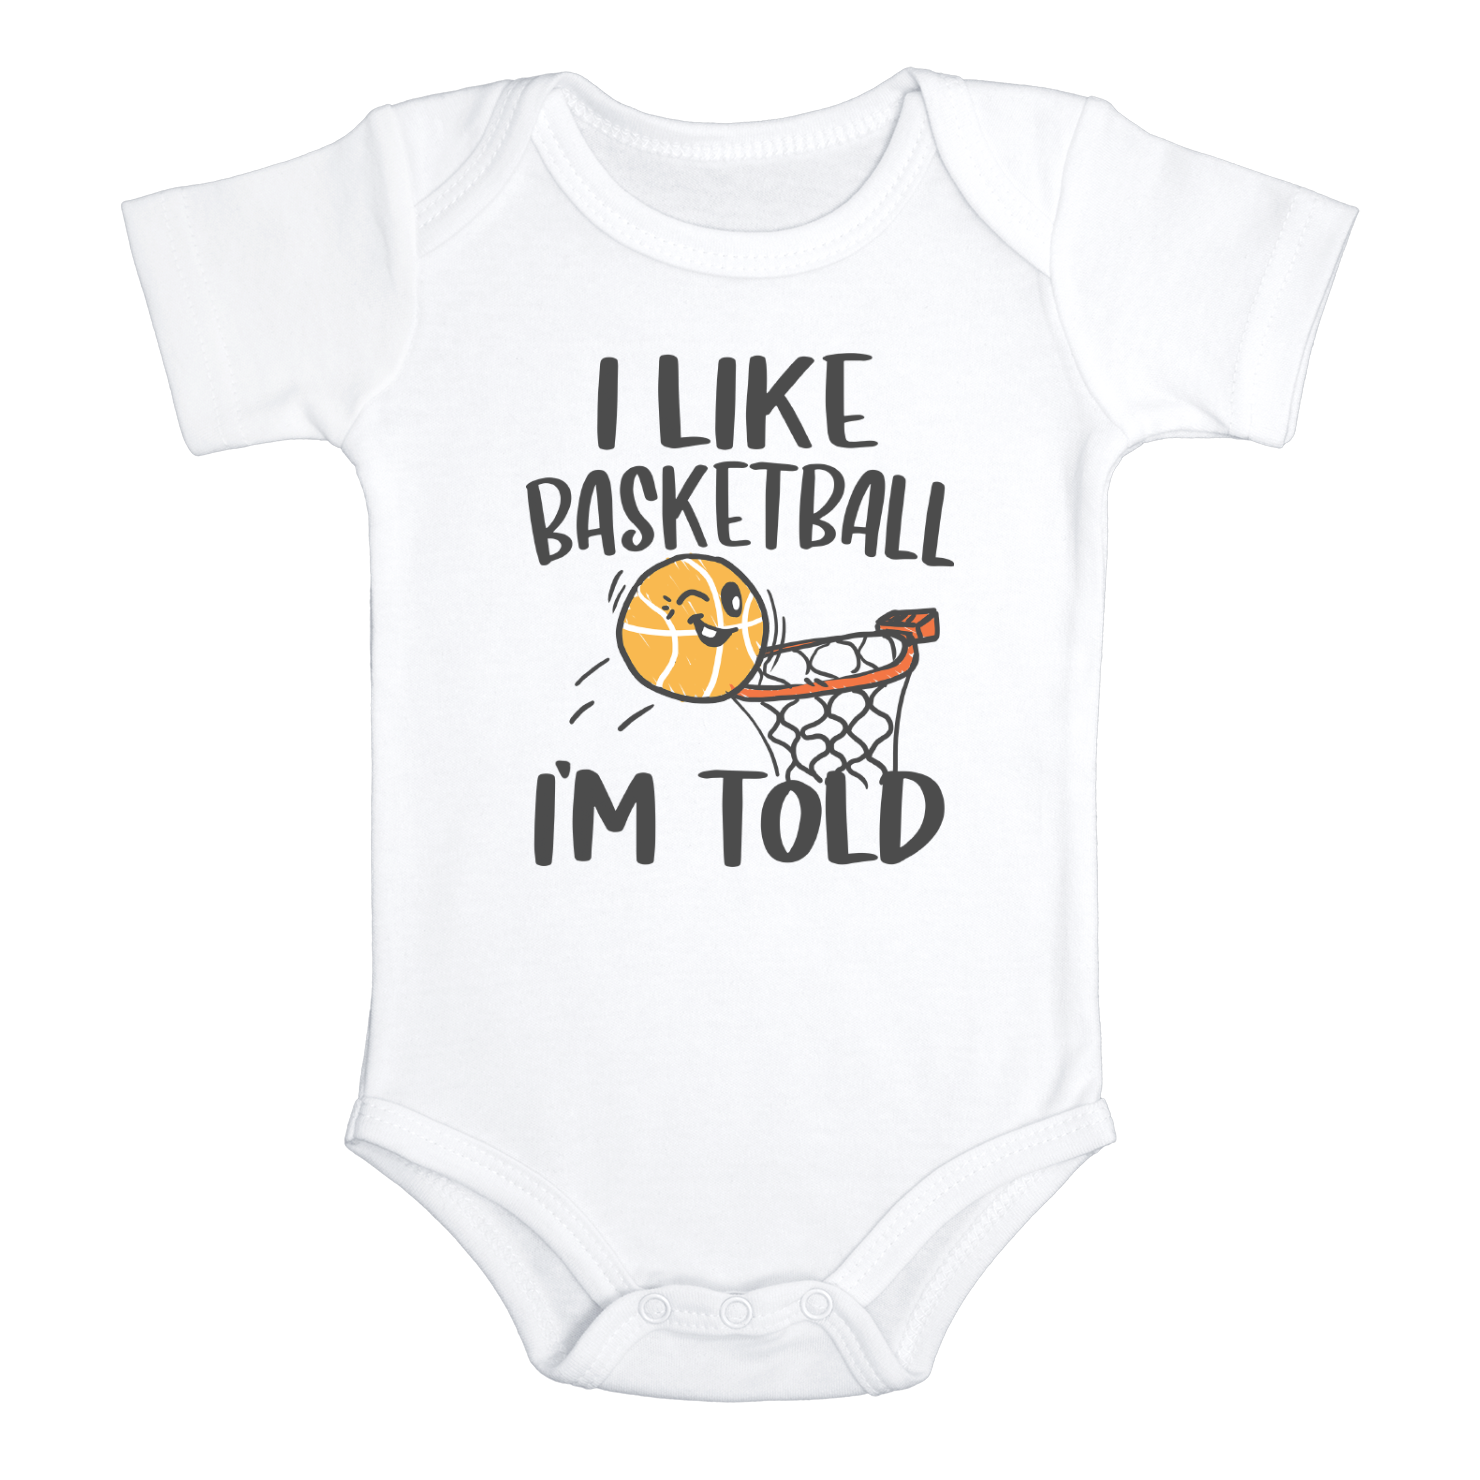 I LIKE BASKETBALL I'M TOLD Funny baby onesies basketball bodysuit (white: short or long sleeve)